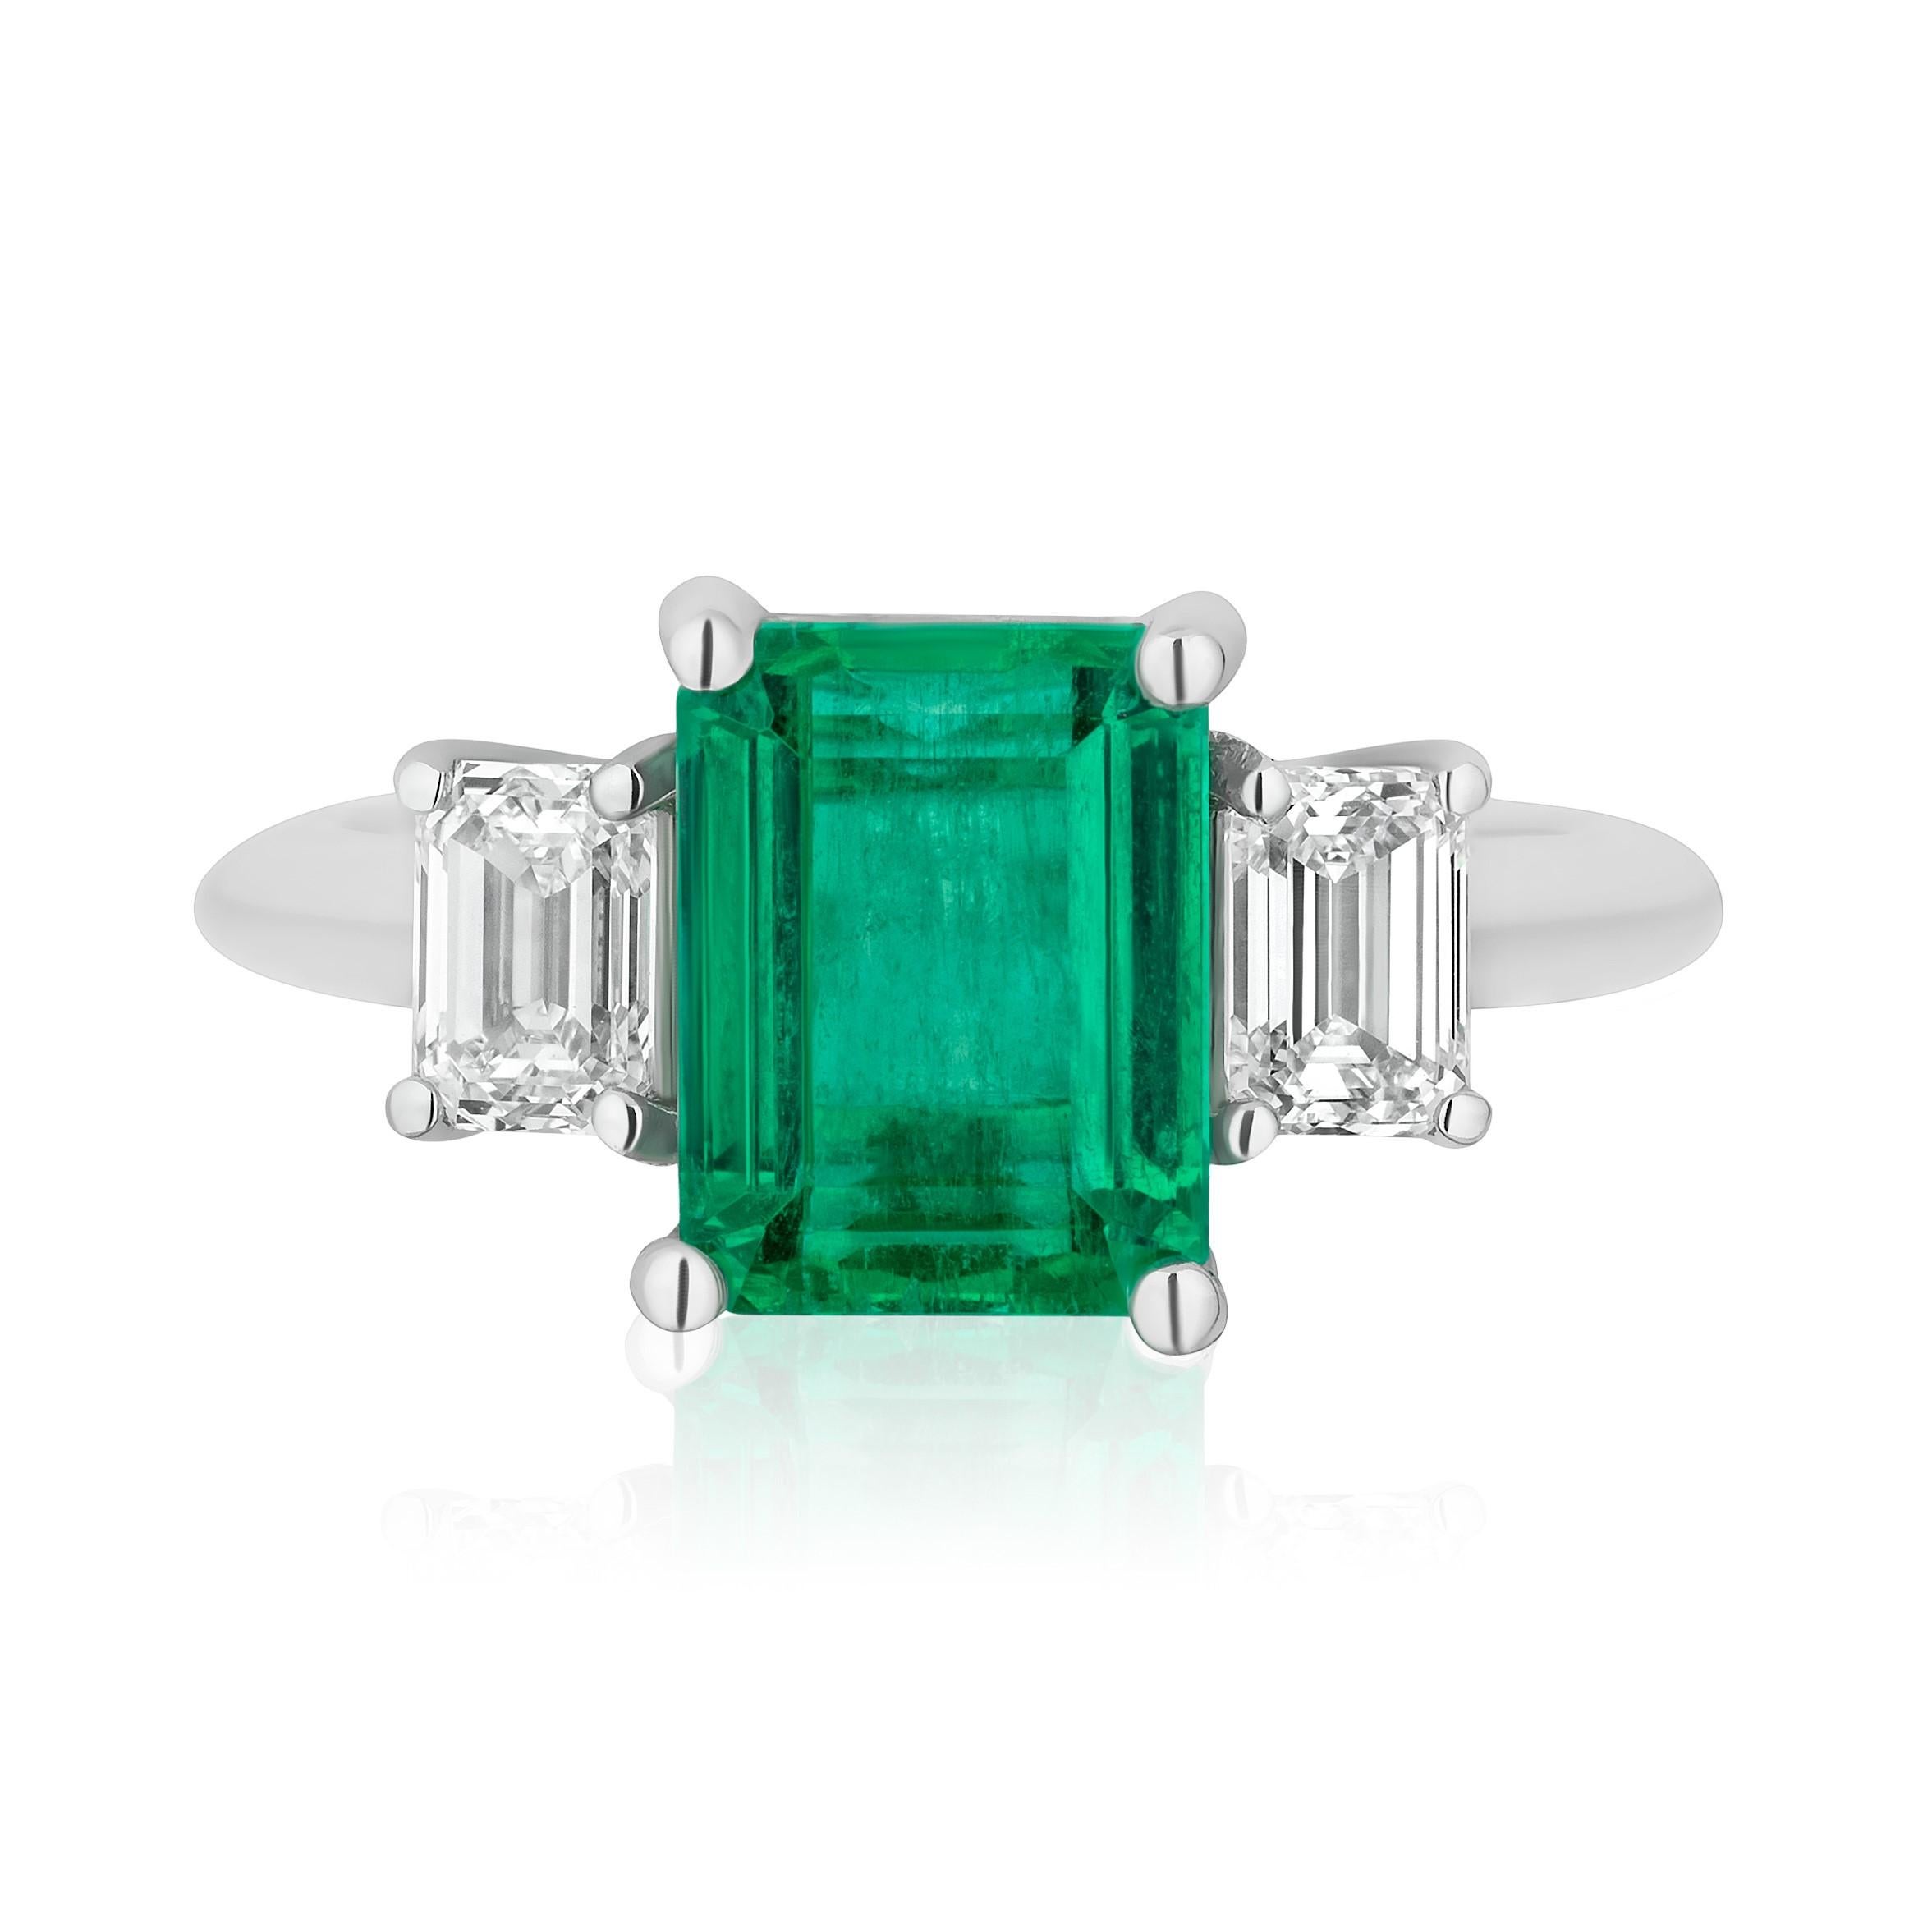 Andreoli 3.58 Carat Emerald Diamond Platinum Ring

This ring features:
- 0.89 Carat Diamond
- 3.58 Carat Emerald Colombian Certified
- 9.32 Gram Platinum
- Made In Italy